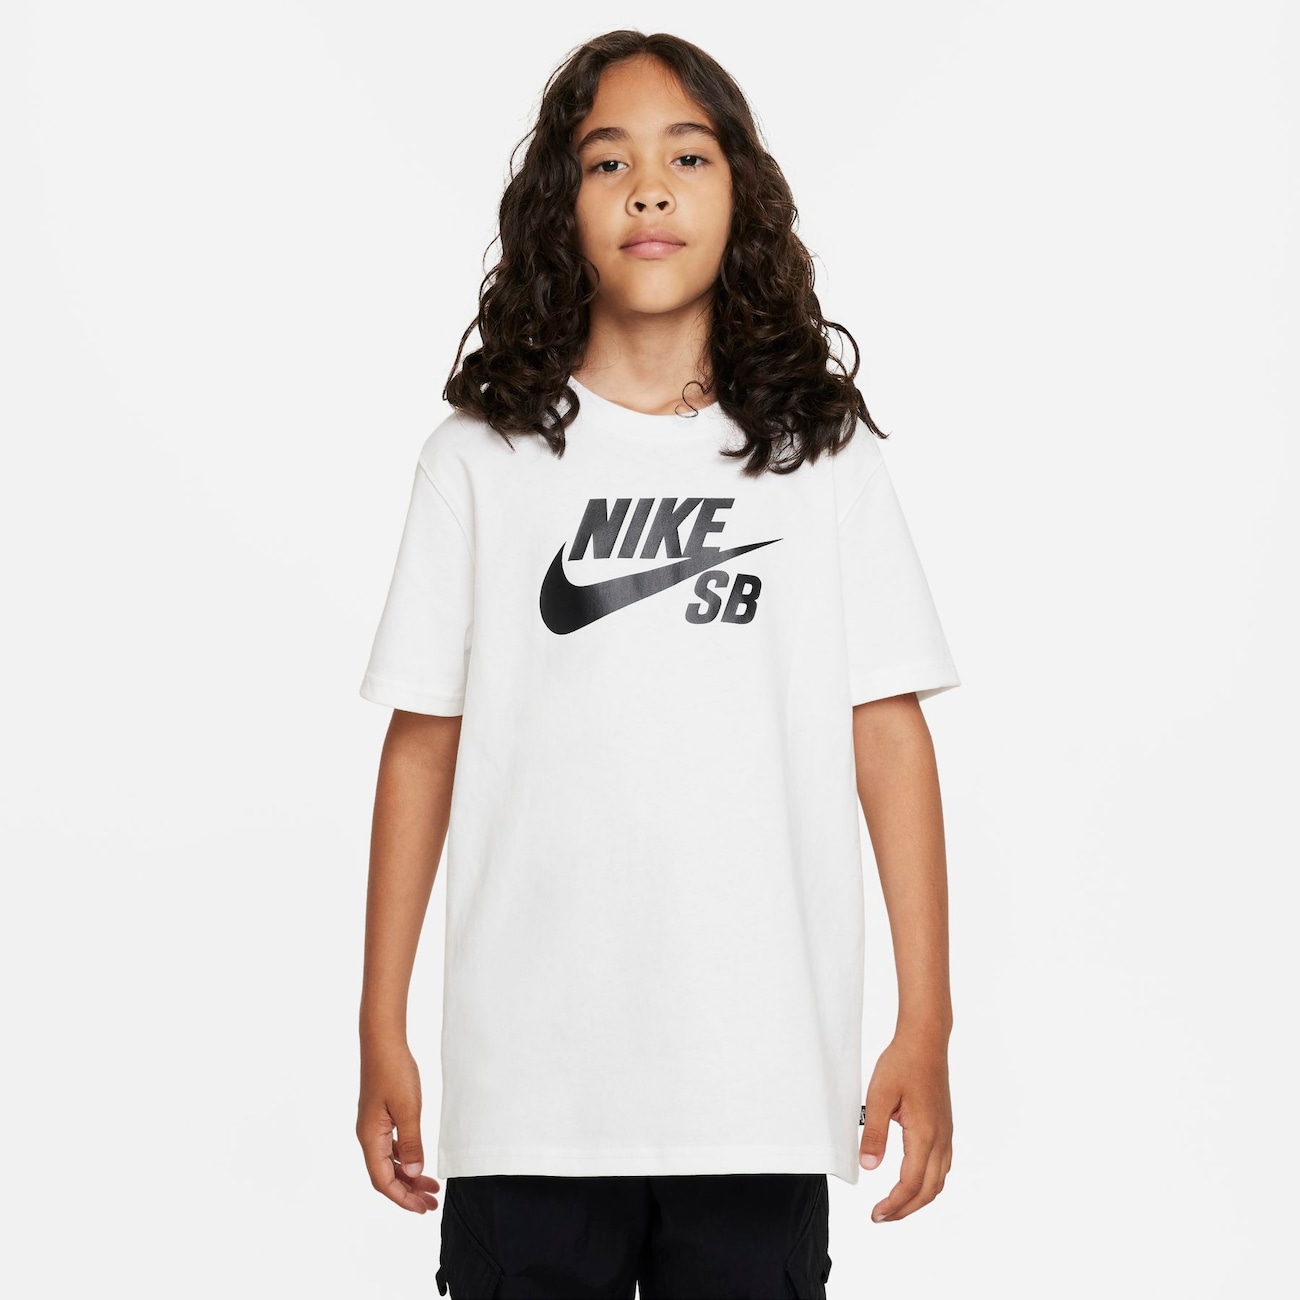 Camiseta Nike SB Infantil